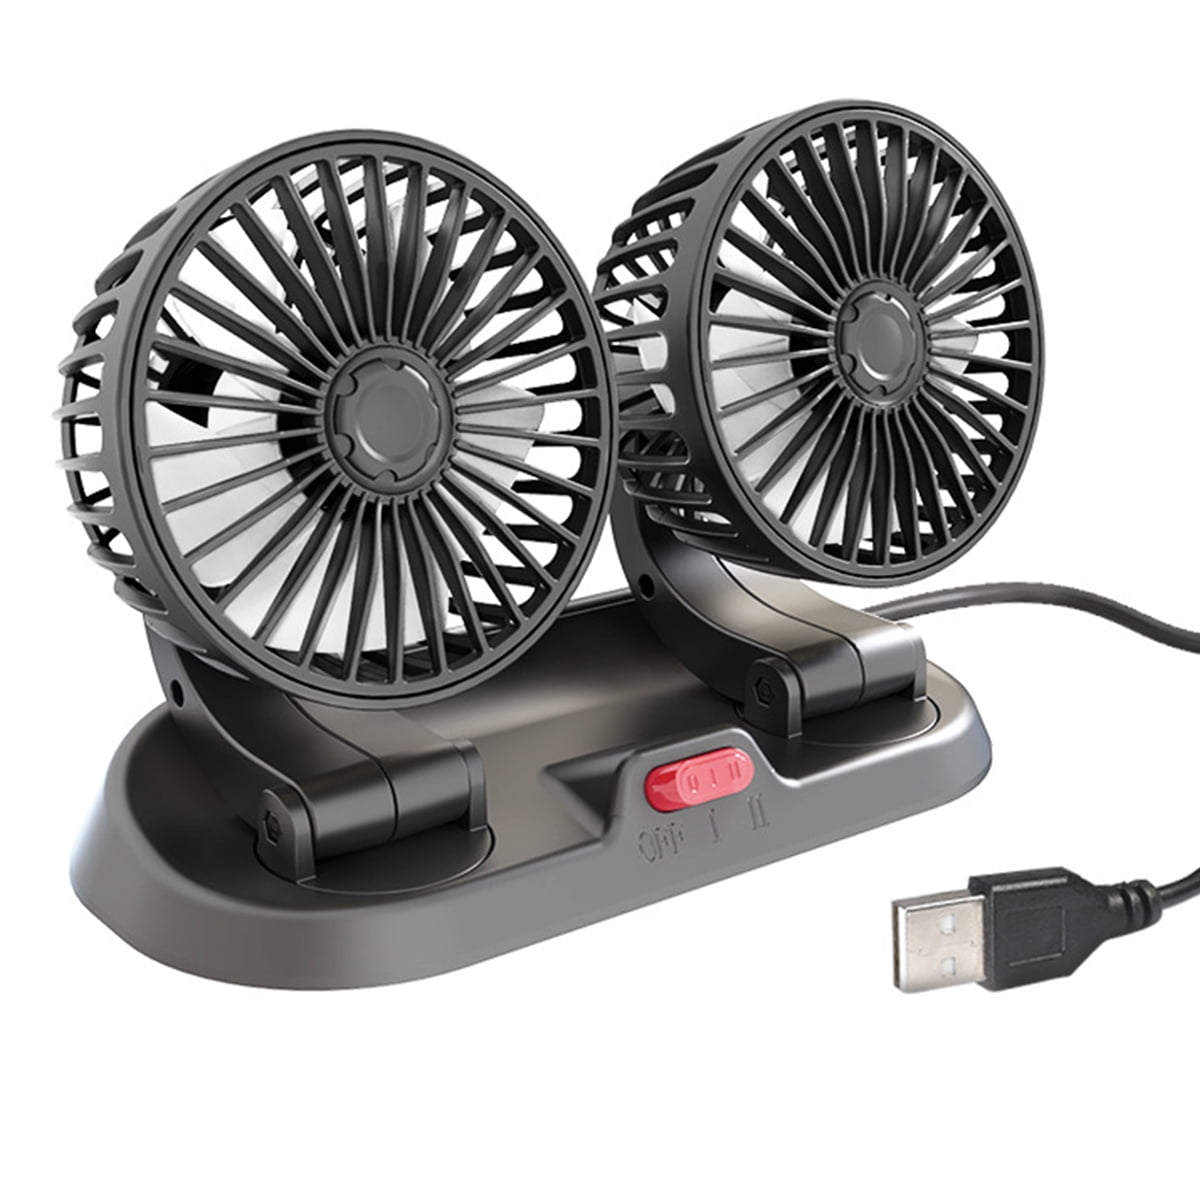 LEMOISTAR Car Fan, Battery Operated USB Car Fan, 4 Speed Strong Airflow,360  Degree Rotatable Car Fan, 5V Cooling Air Small Personal Fan for Car